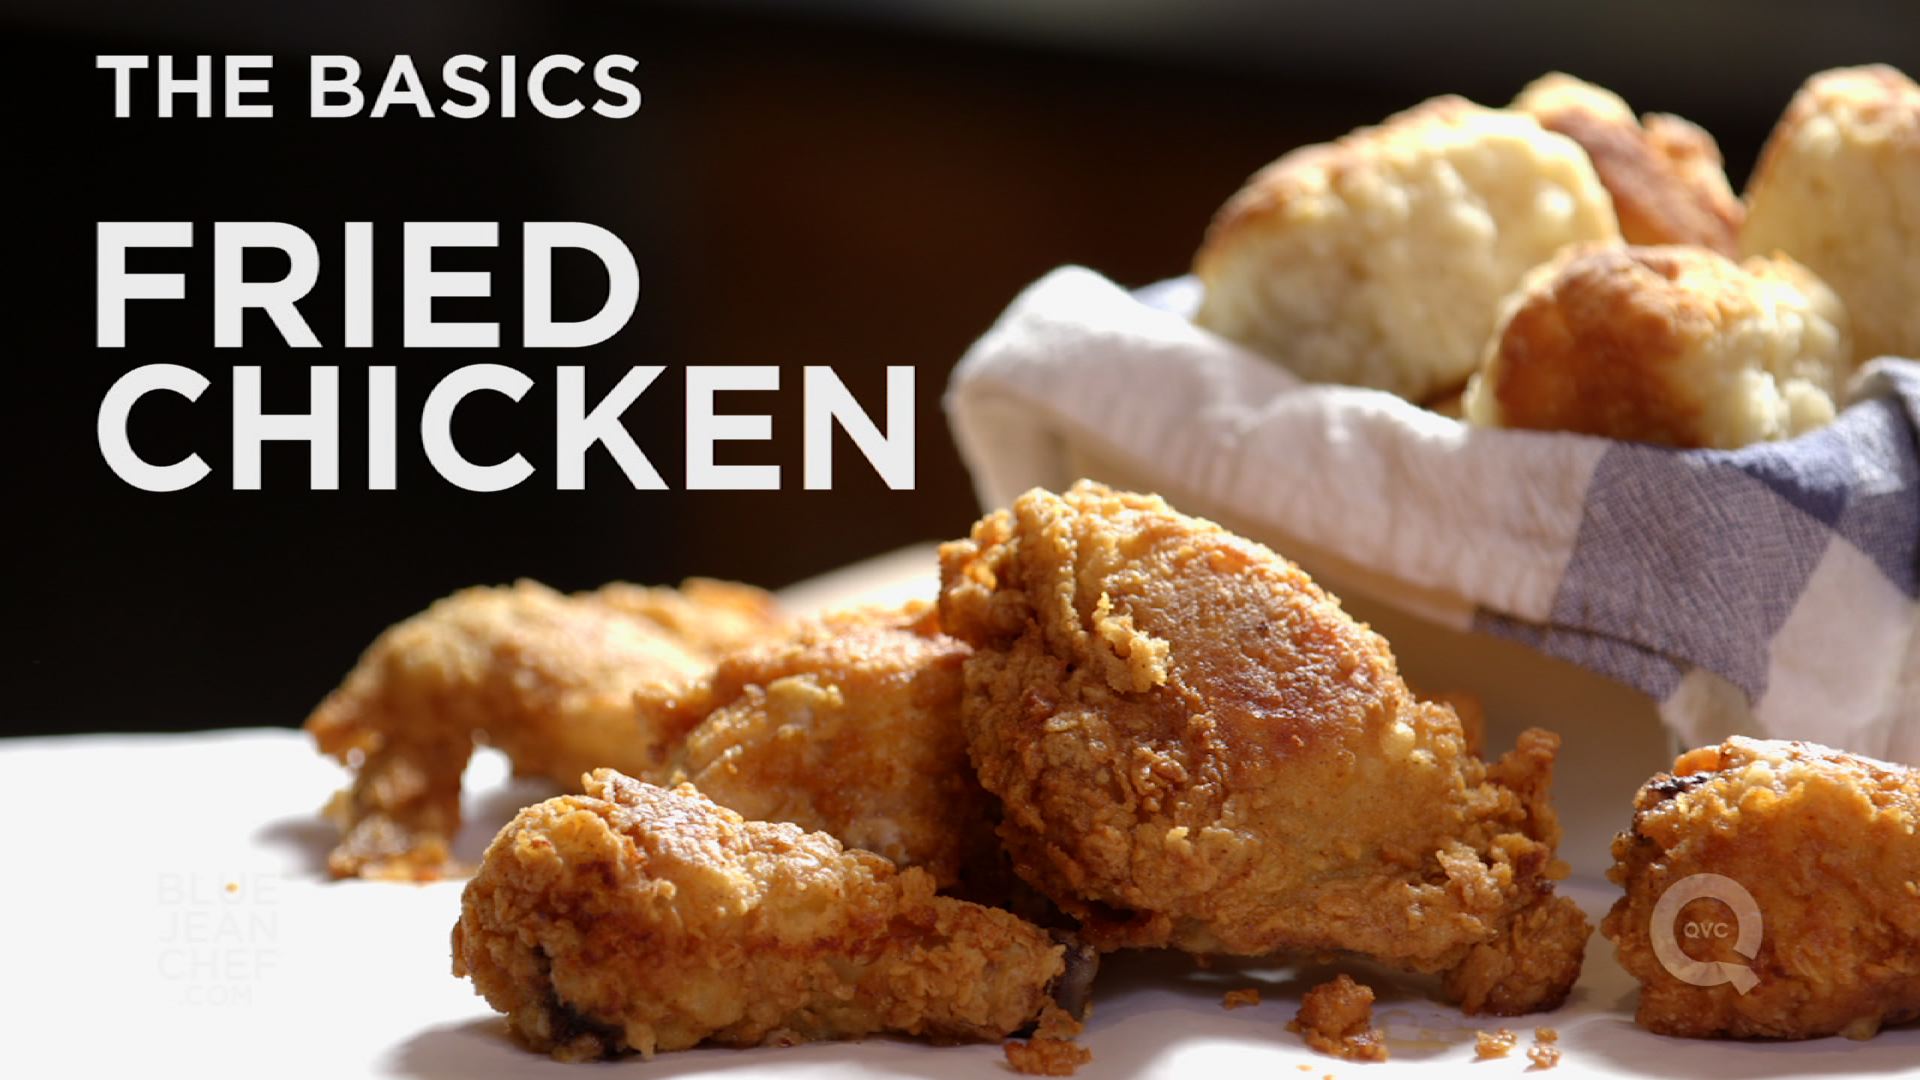 Basics - fried chicken pic.jpg